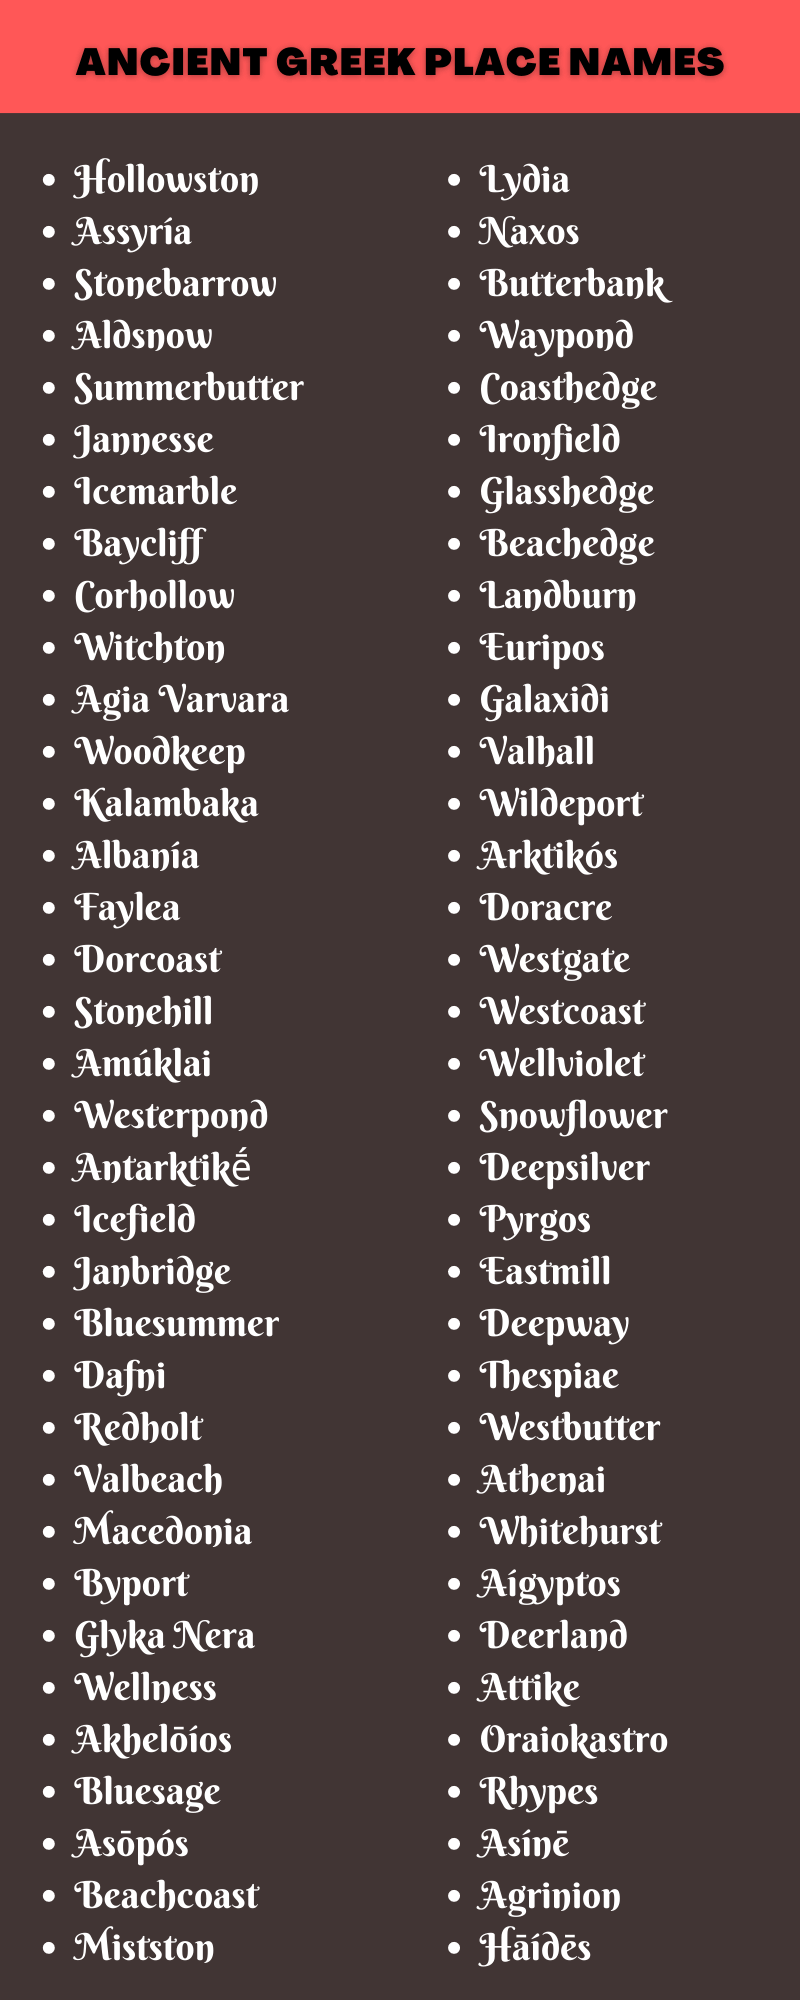 Ancient Greek Place Names